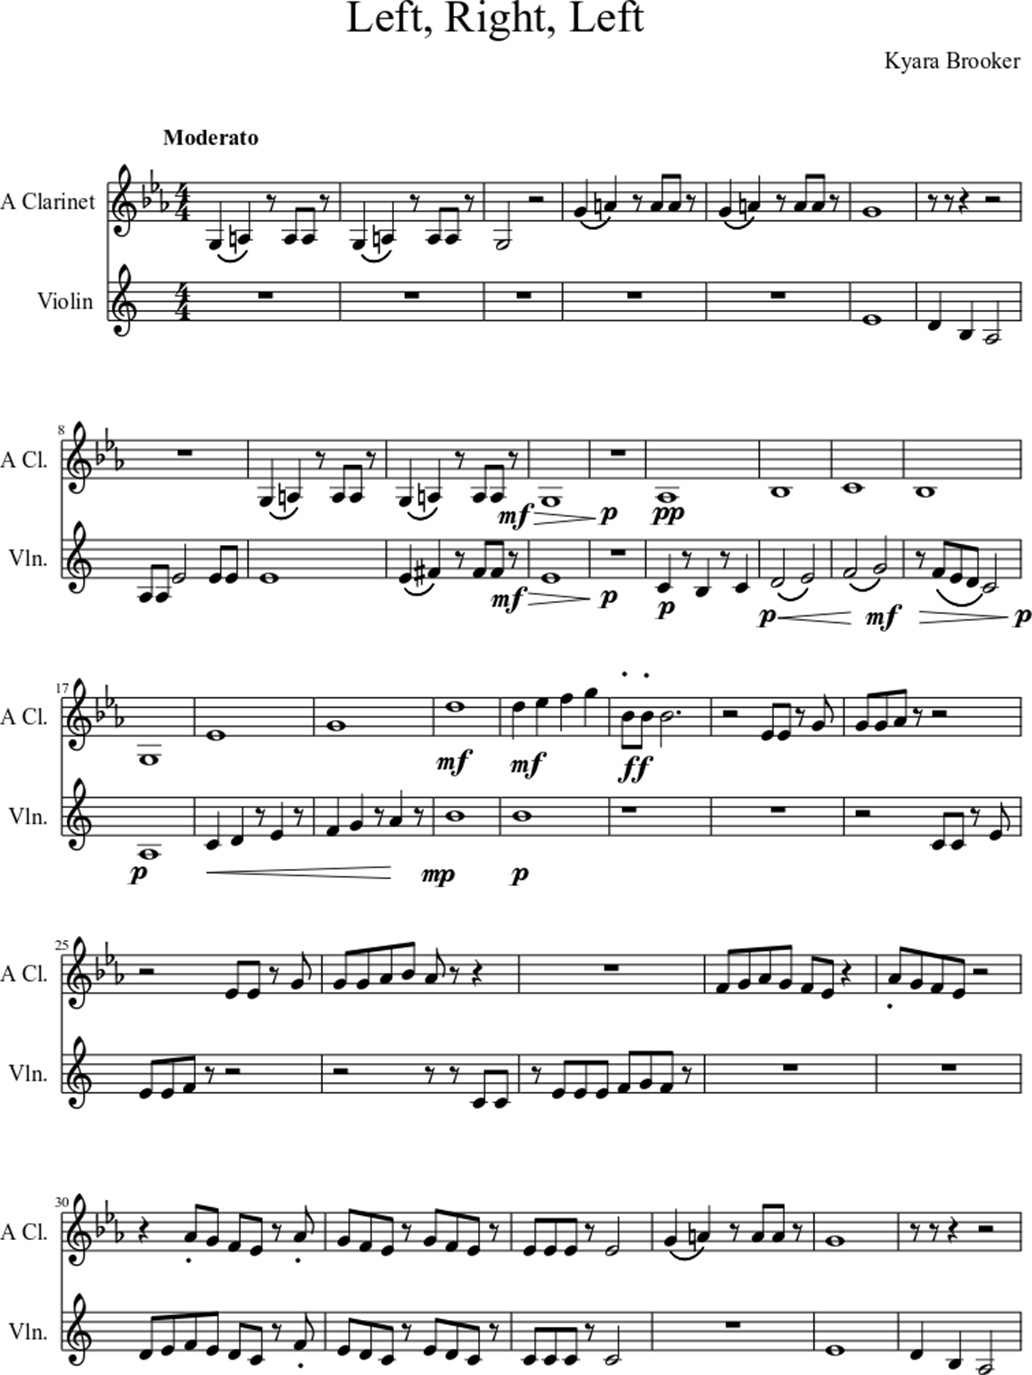 Left right left sheet music notes 1